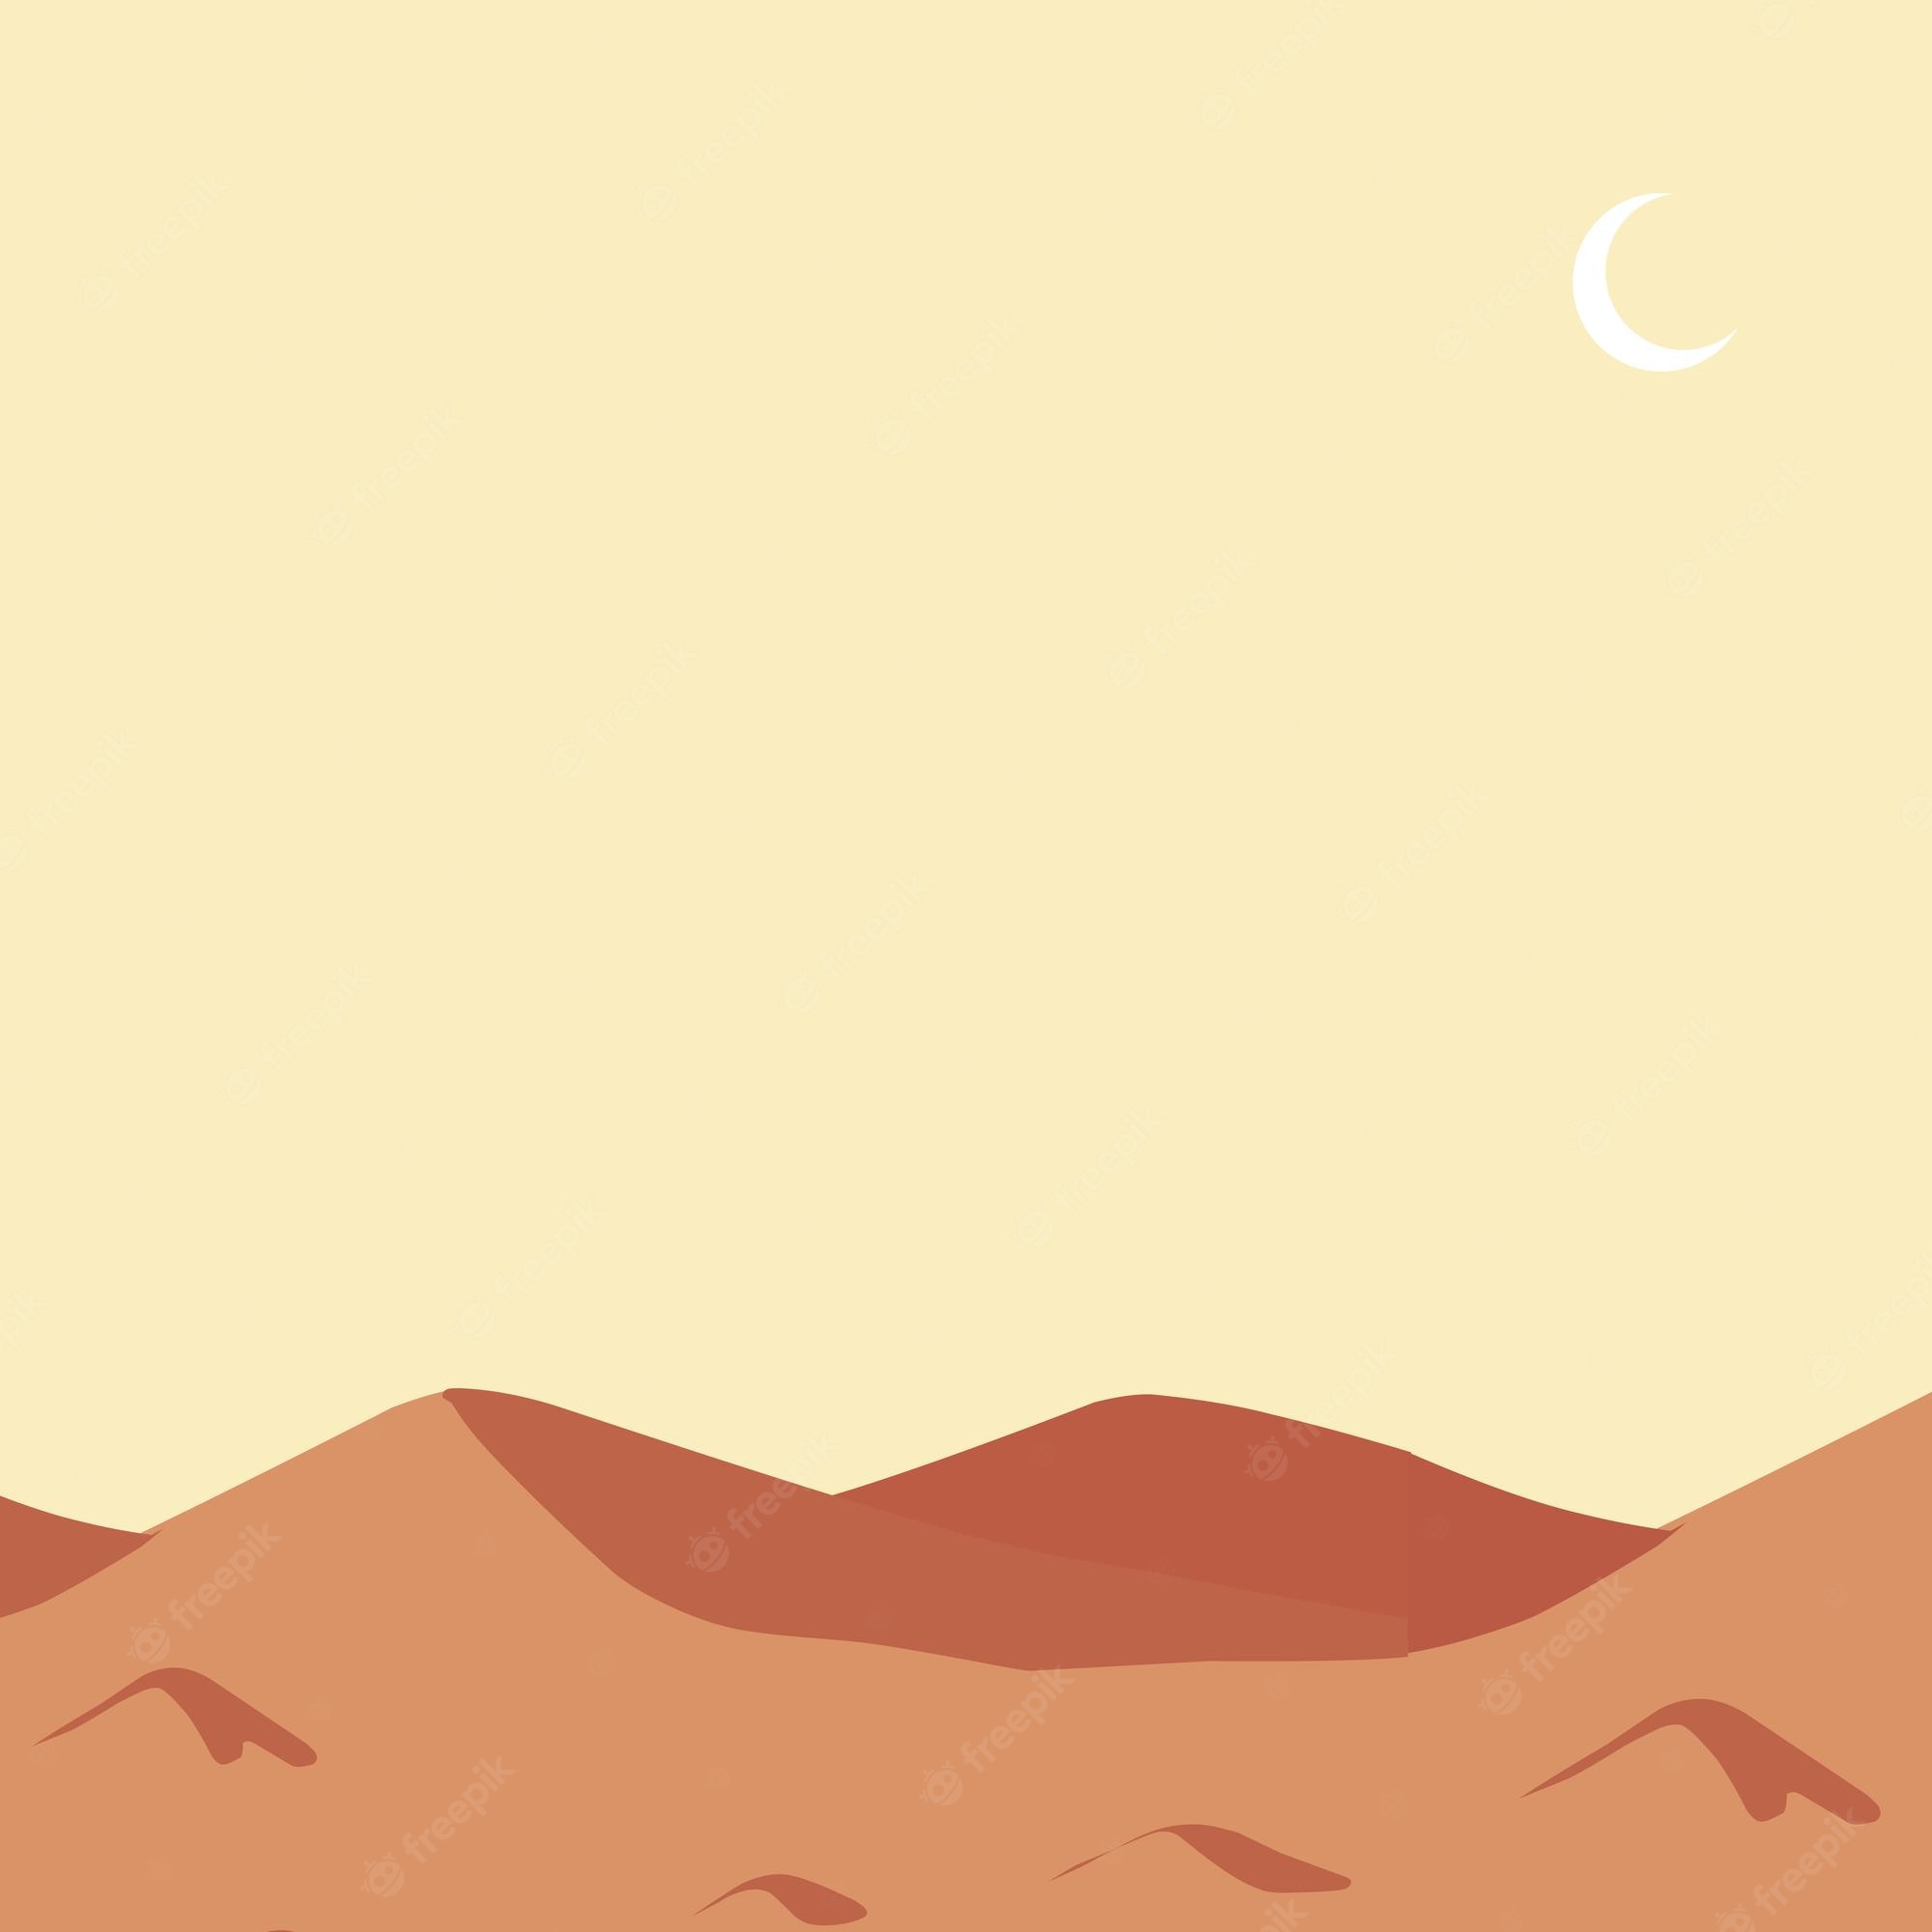 Desert background Vectors & Illustrations for Free Download